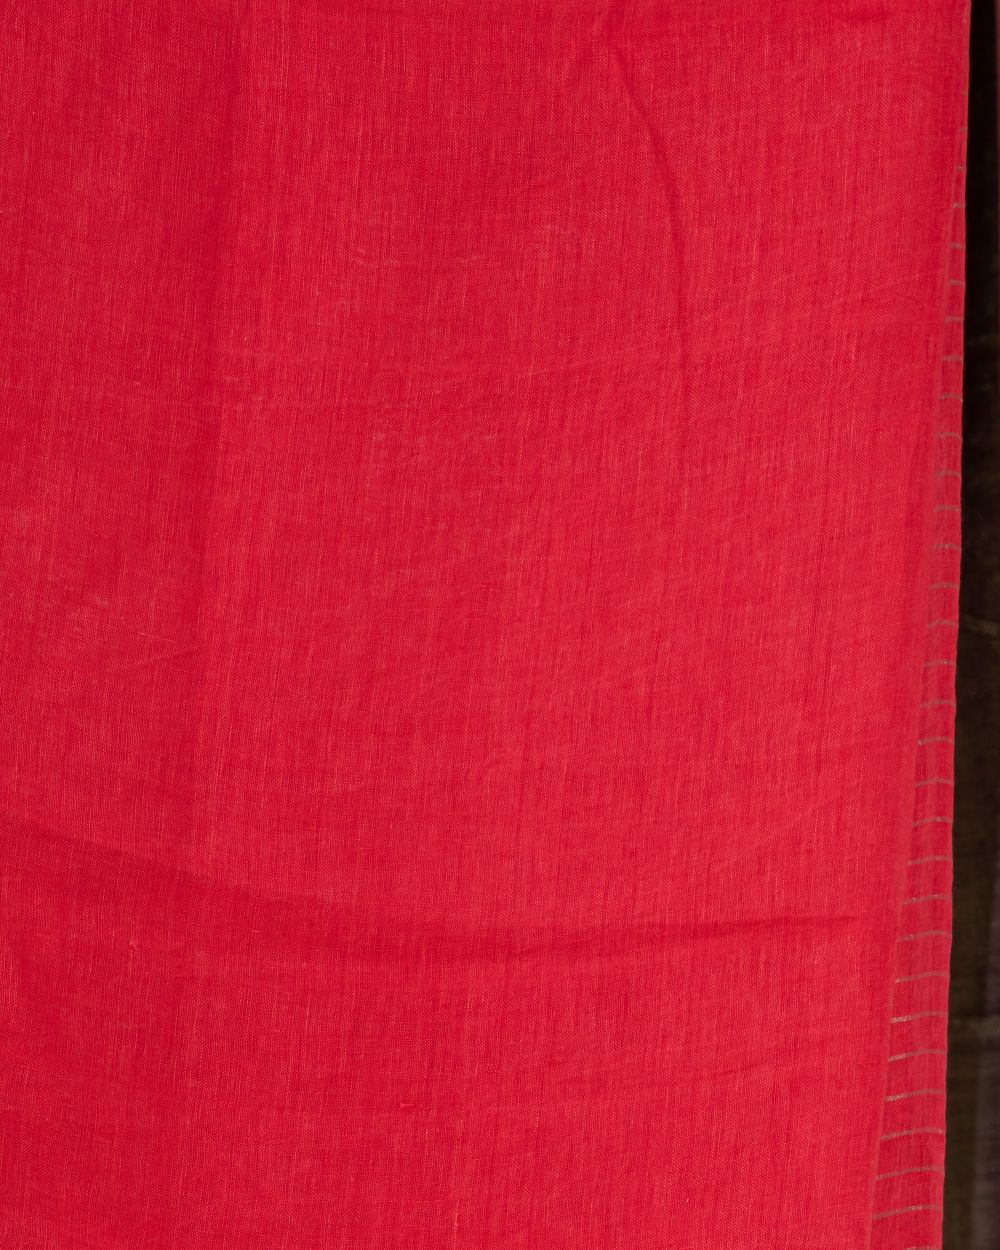 Light pink handwoven linen bengal saree